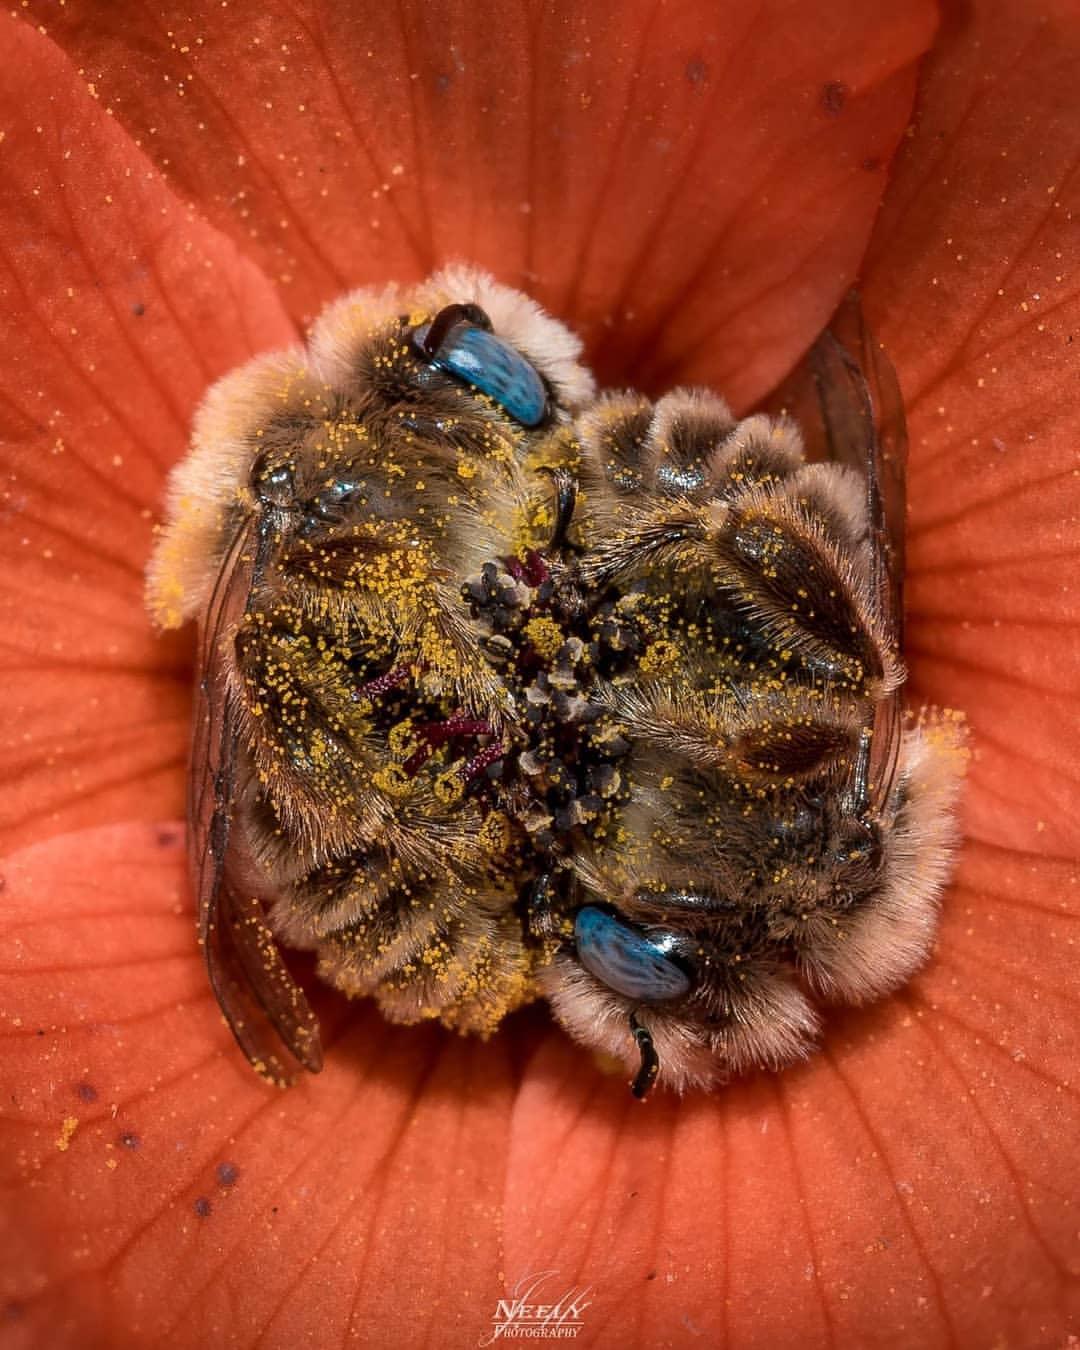 bees sleep in flowers - Neen Photography